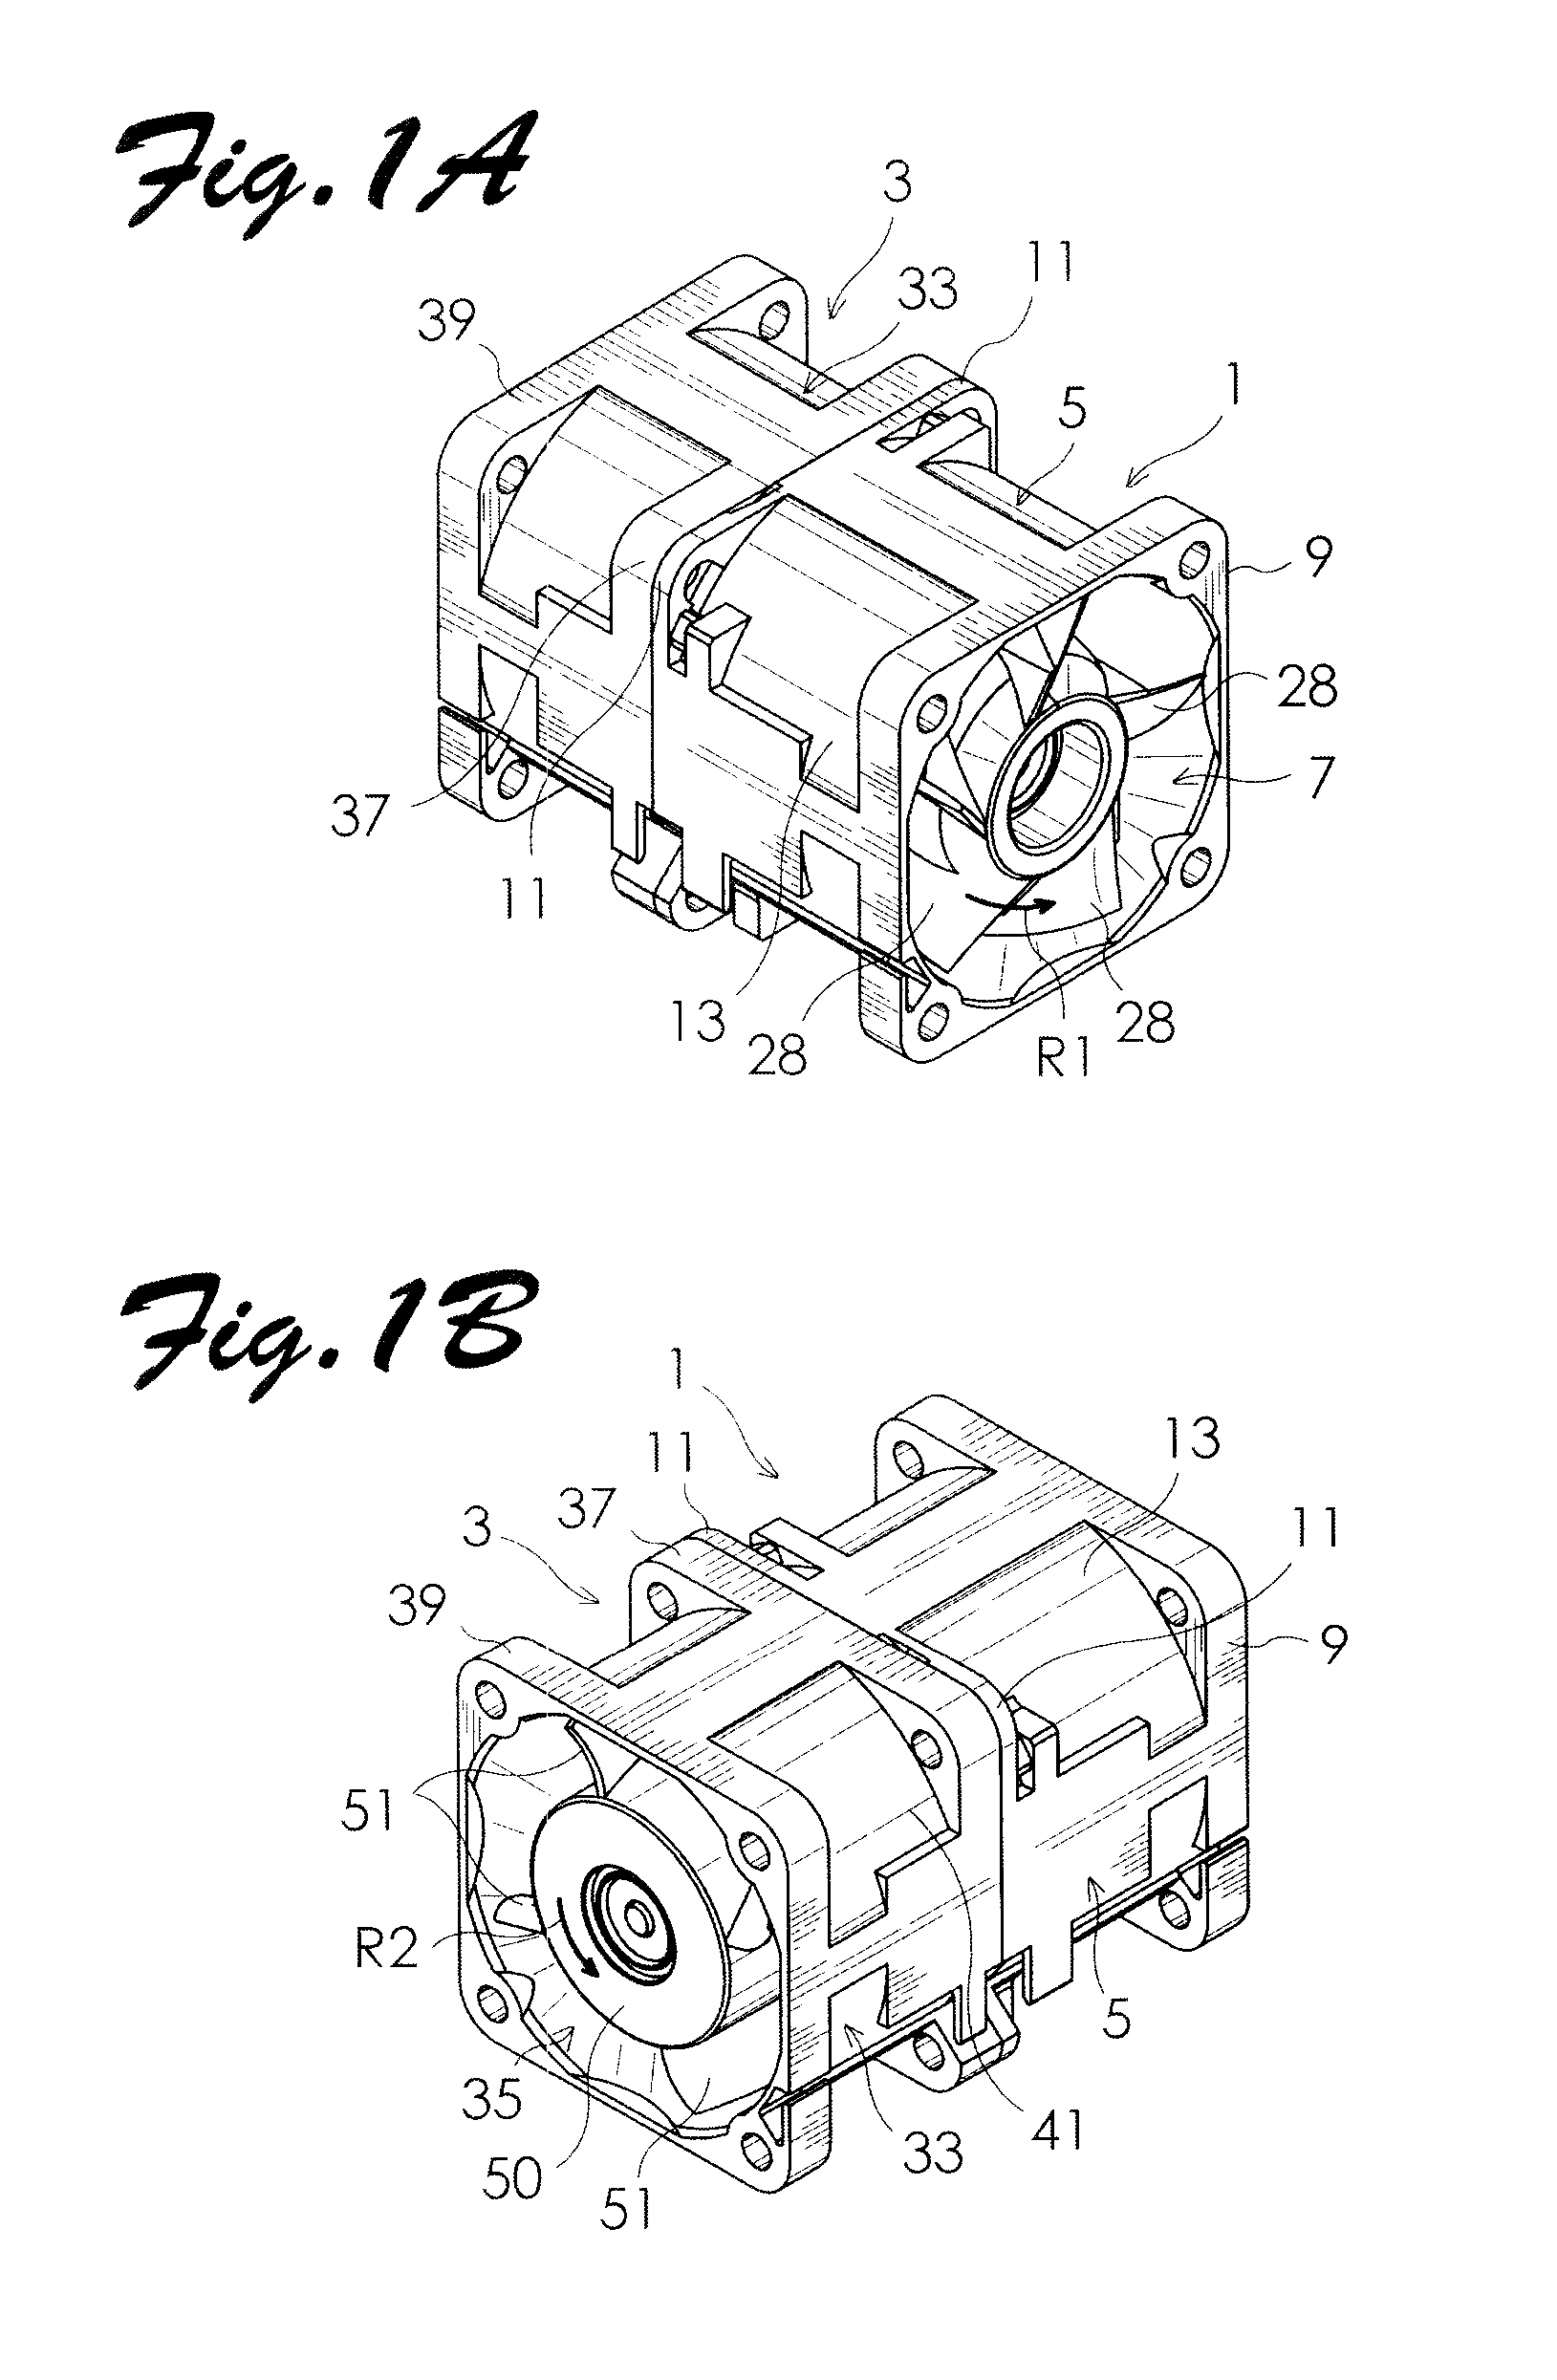 Counter-rotating axial flow fan